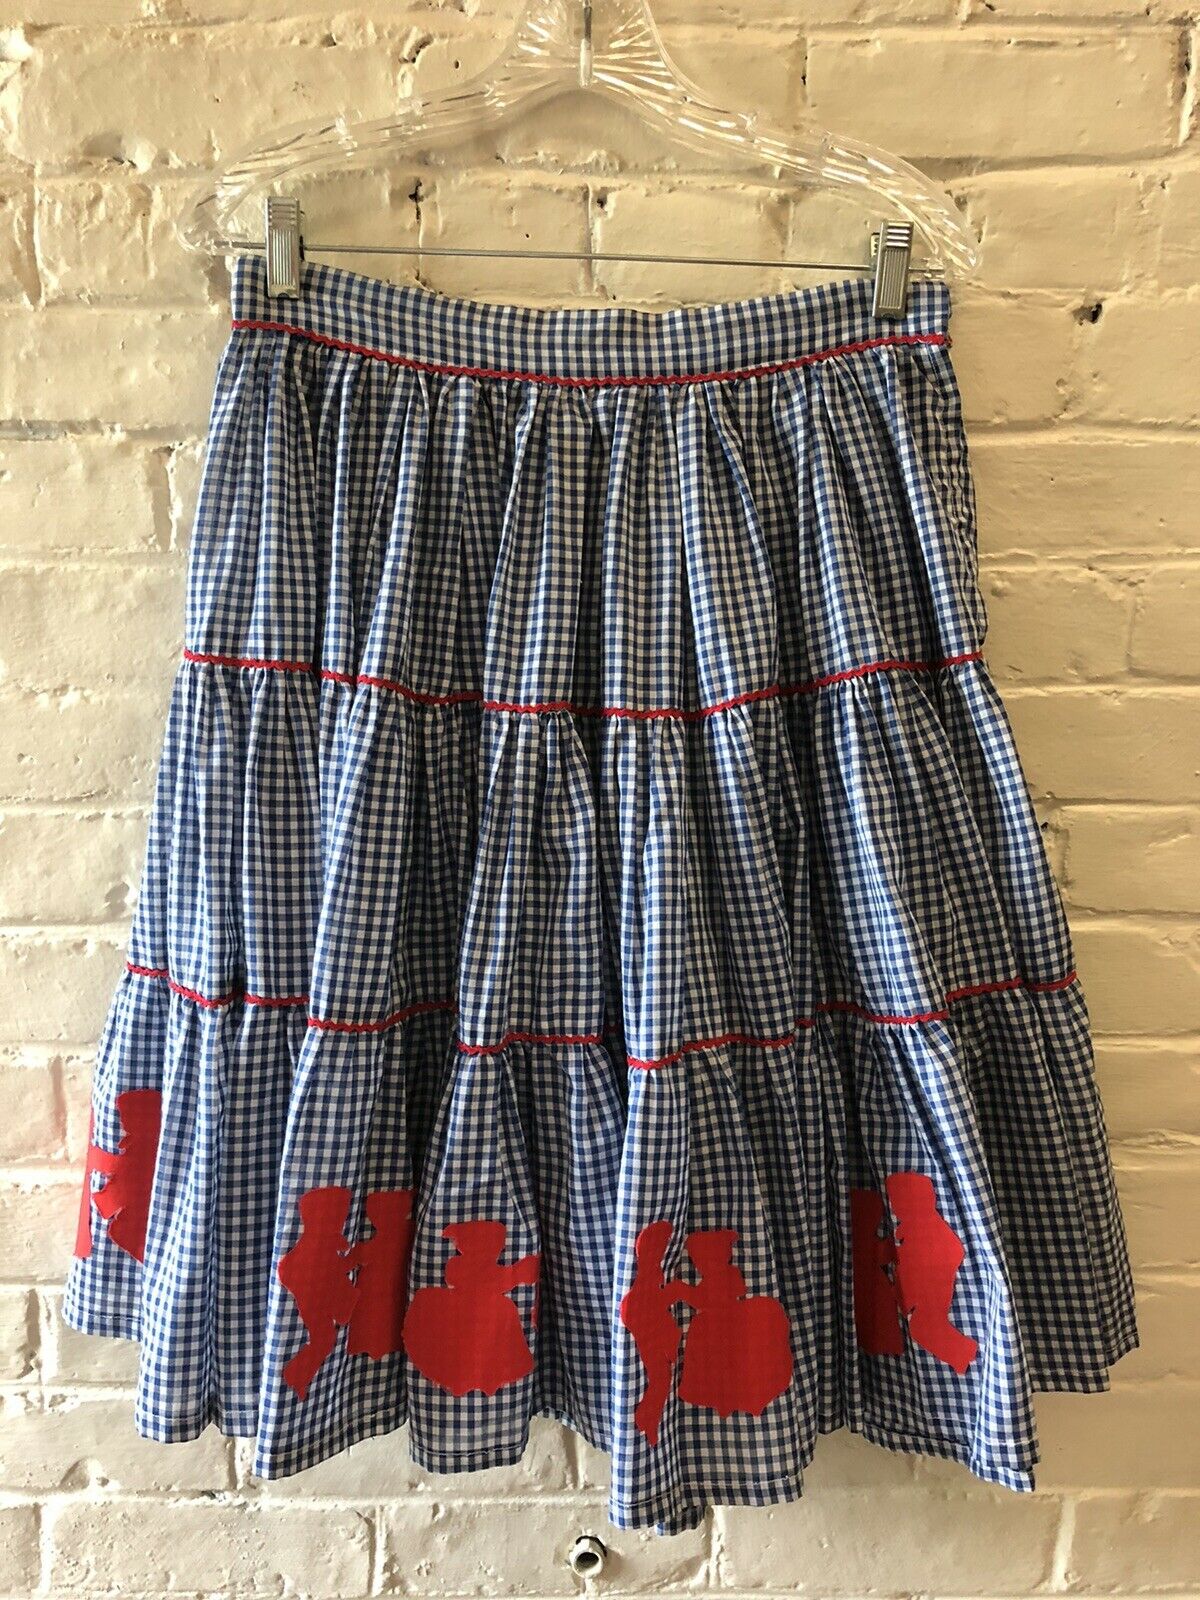 M Vintage Handmade Western Square Dance Skirt Blue Check